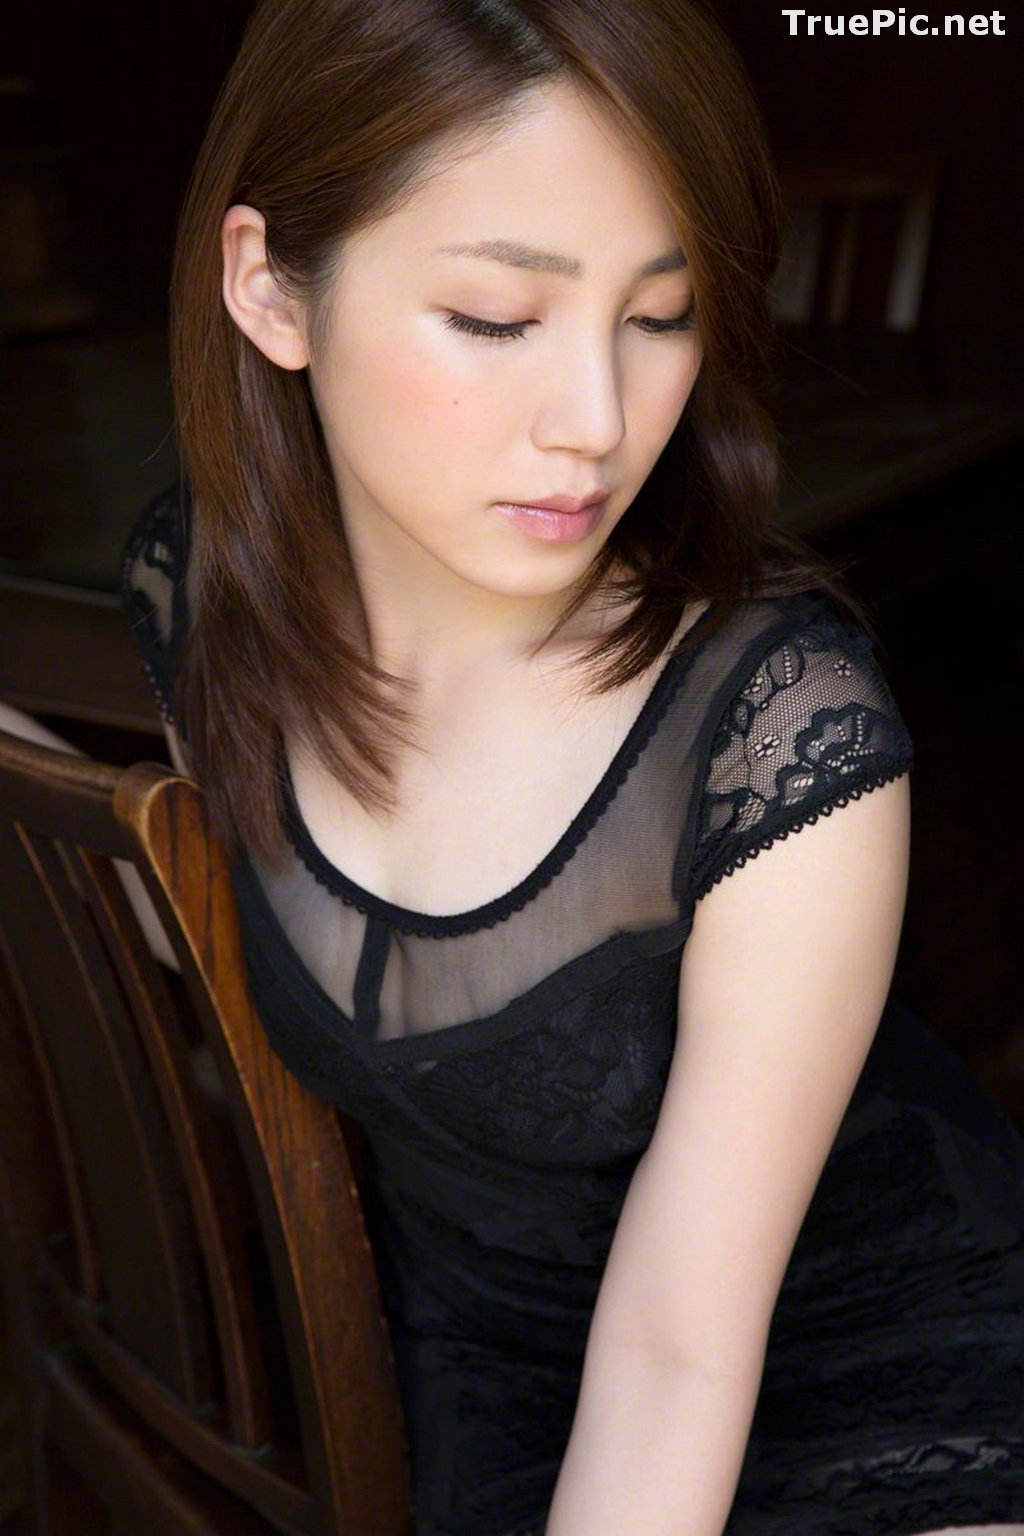 Image [Wanibooks Jacket] No.129 - Japanese Singer and Actress - You Kikkawa - TruePic.net - Picture-22